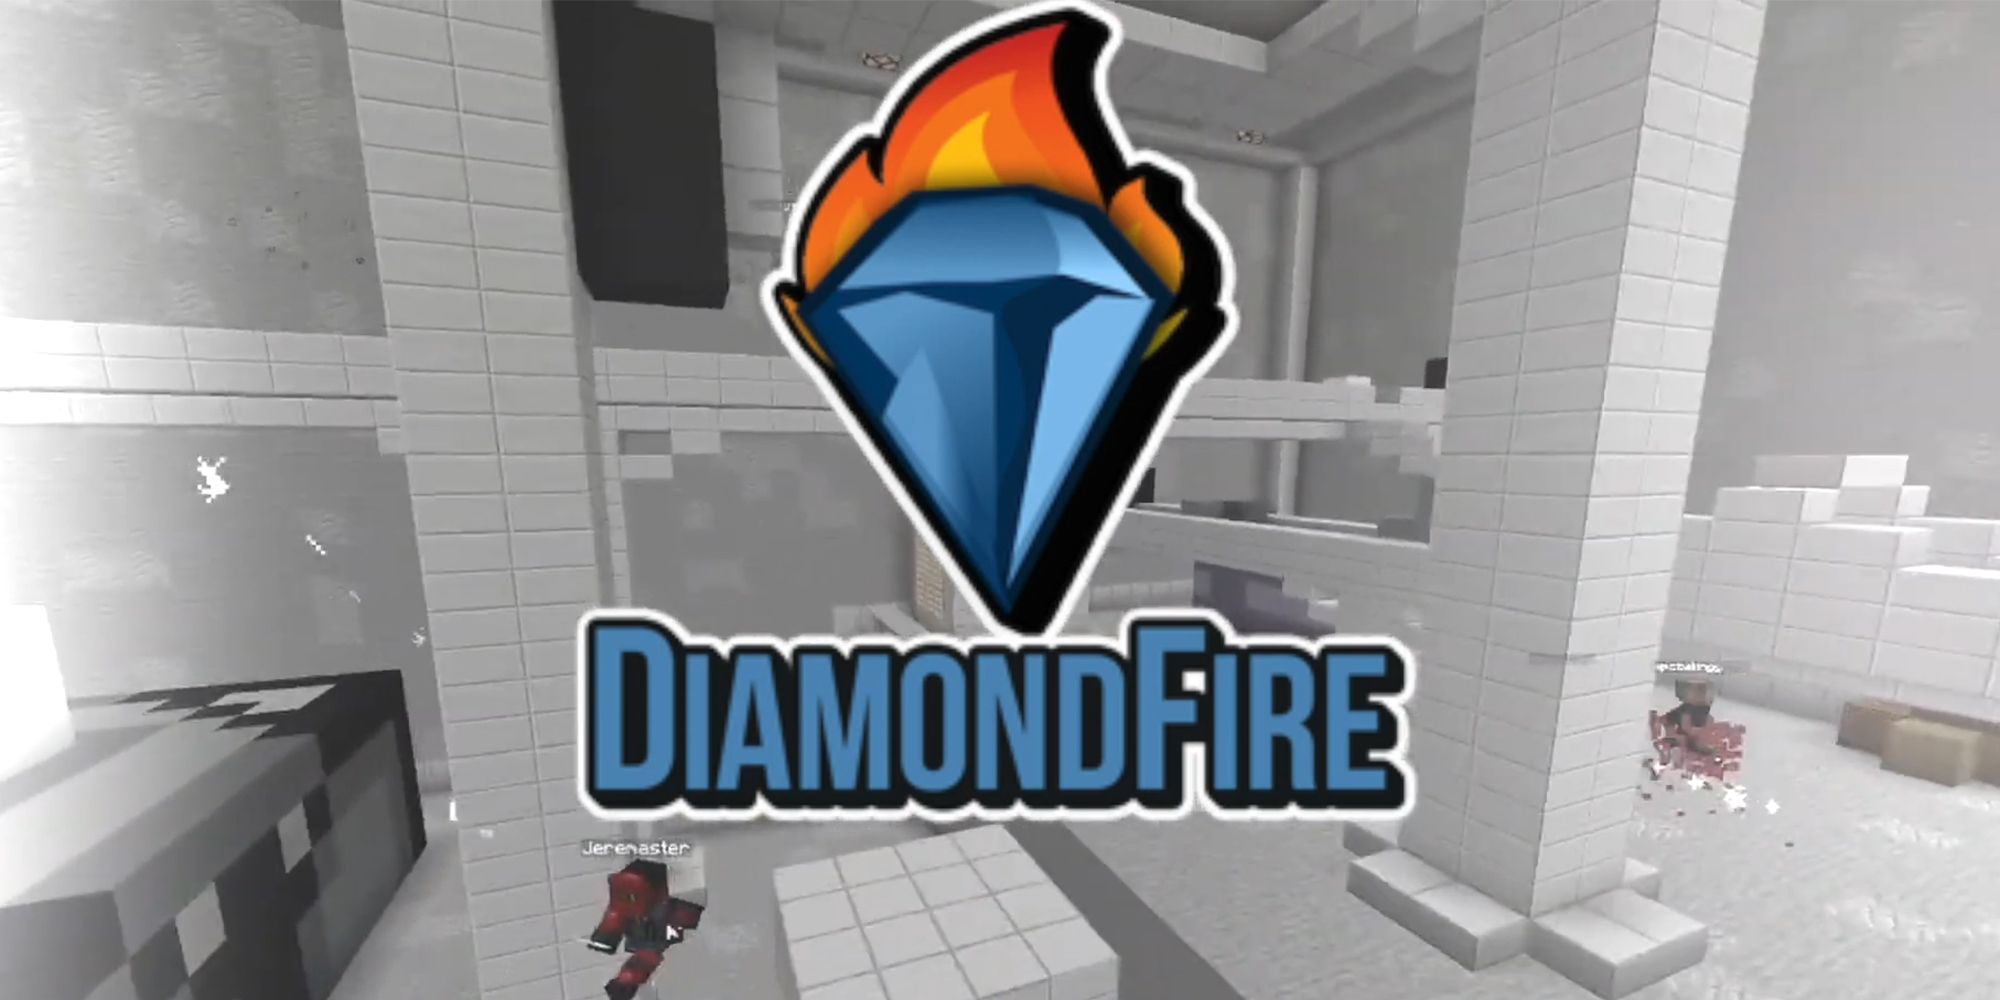 diamond fire server logo in trailer